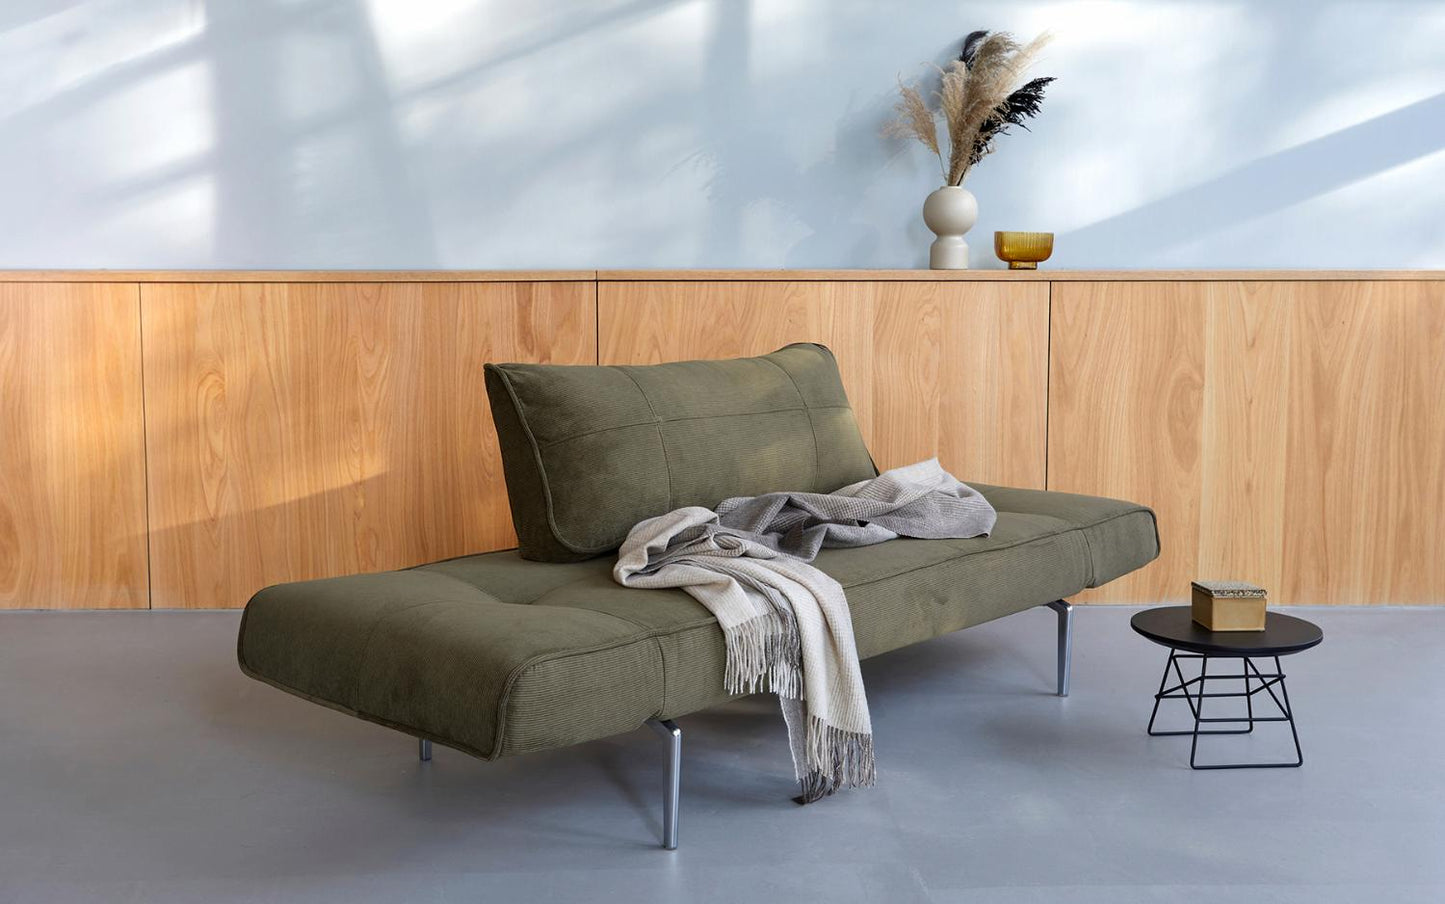 Innovation Zeal Sofa with Aluminum Legs